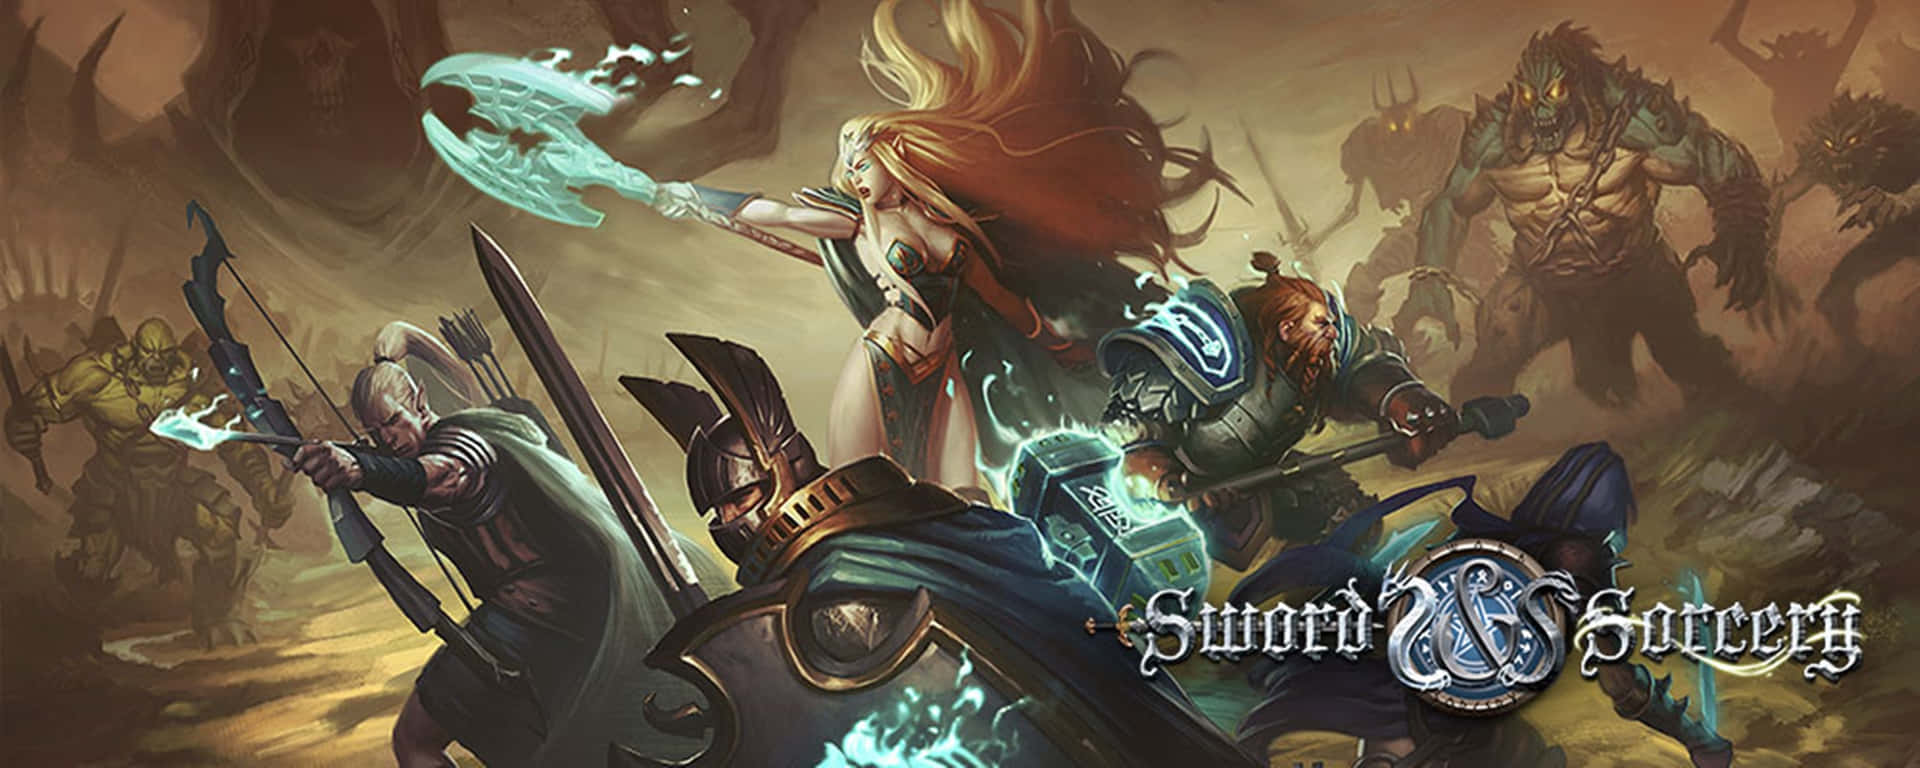 Epic Fantasy Battle Swordand Sorcery Wallpaper